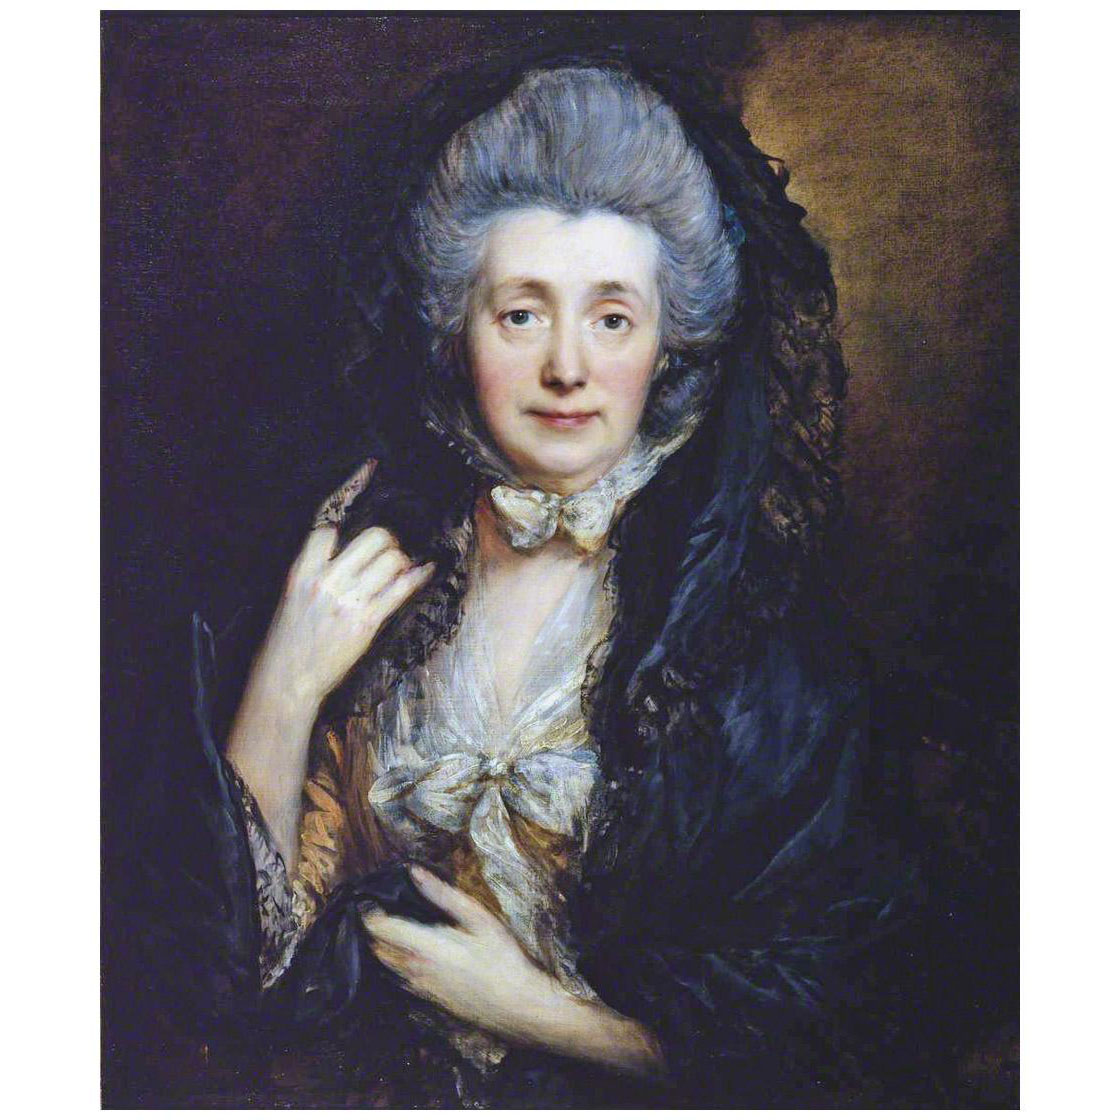 Thomas Gainsborough. Margaret Gainsborough. 1778. Courtauld Gallery London